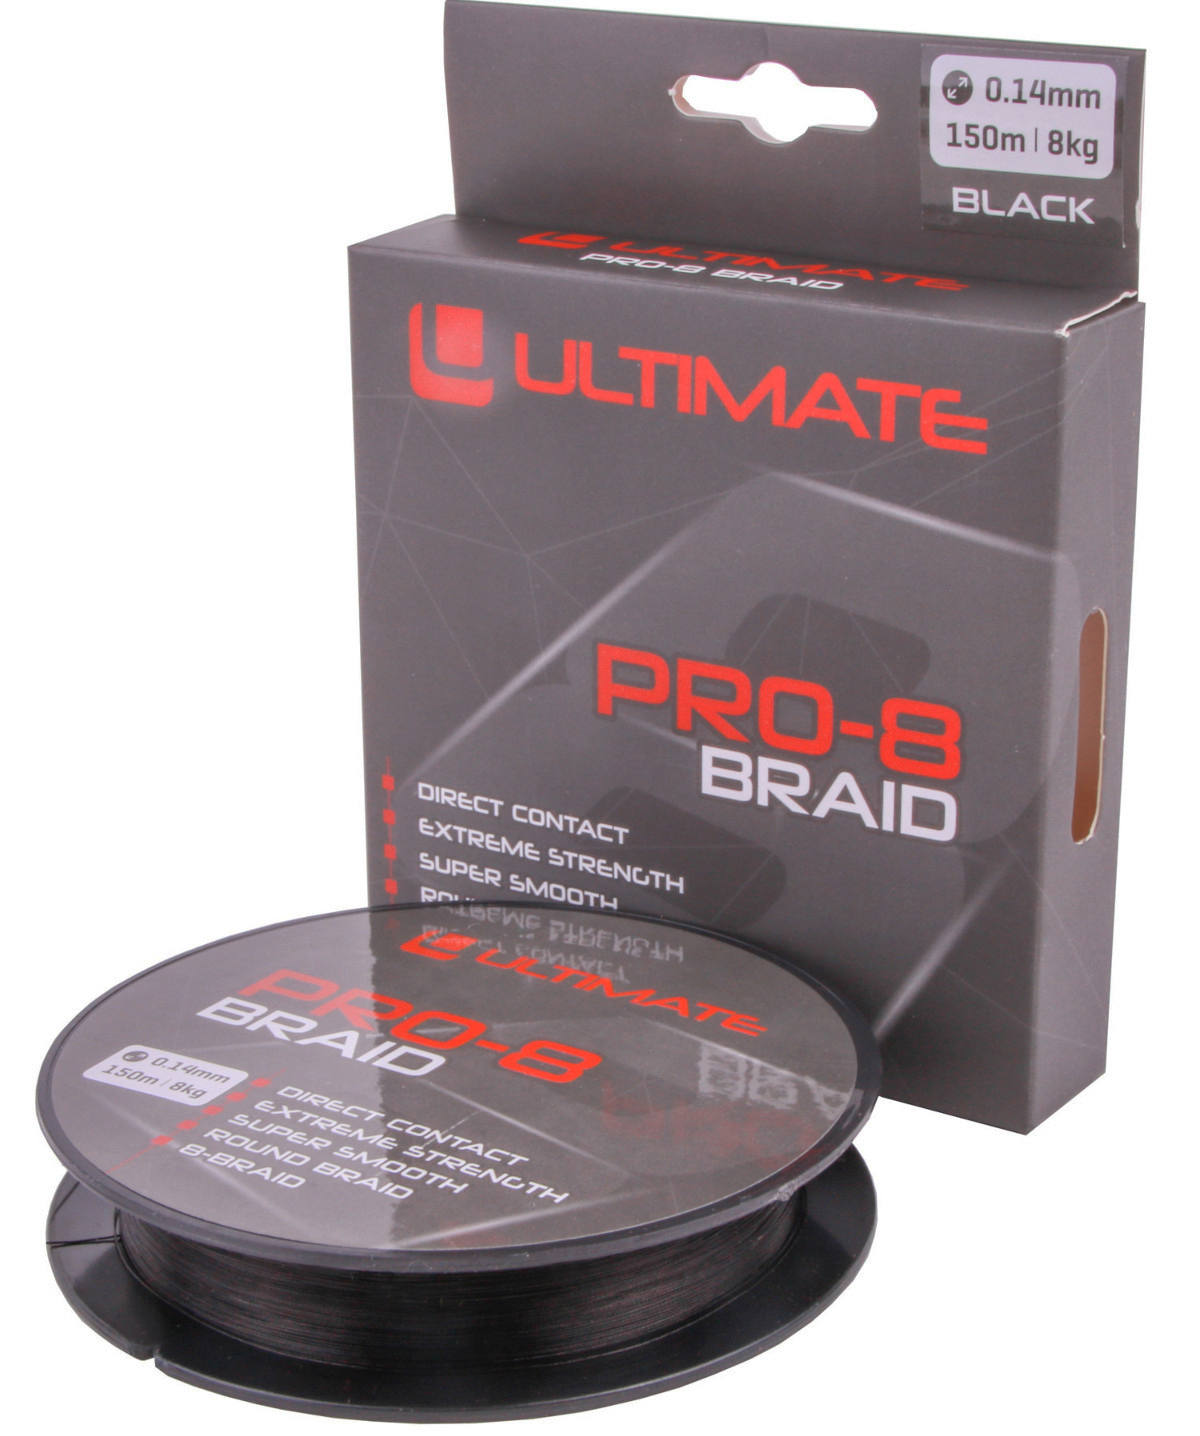 Ultimate Cast Special Light Set - Ultimate Pro-8 Braid 0.14mm 8kg 150m Black